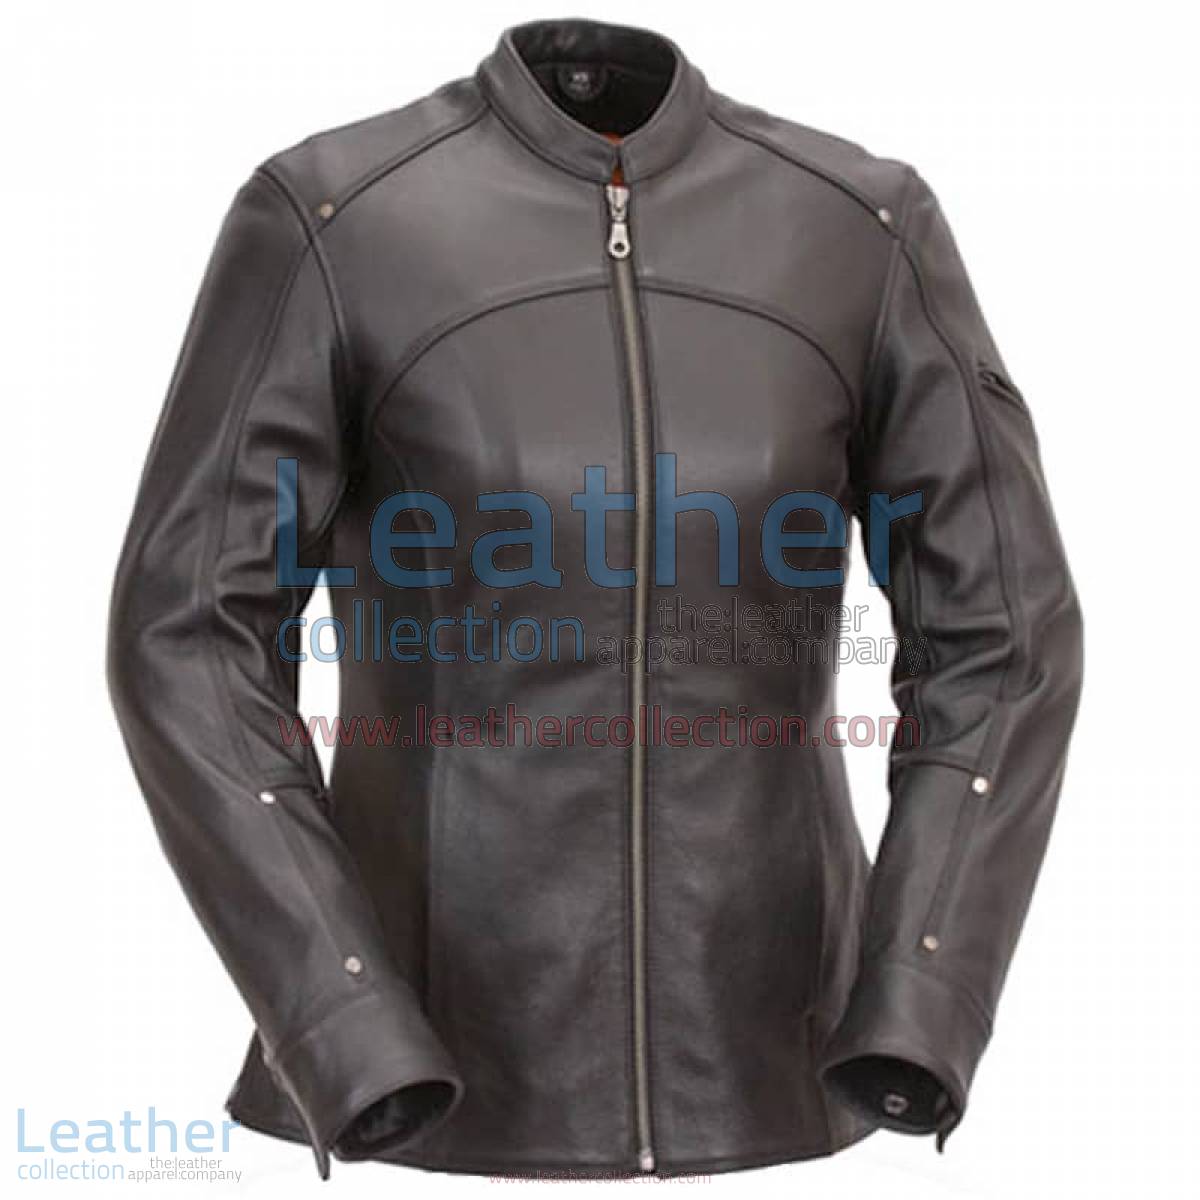 3/4 Length Touring Motorcycle Leather Jacket